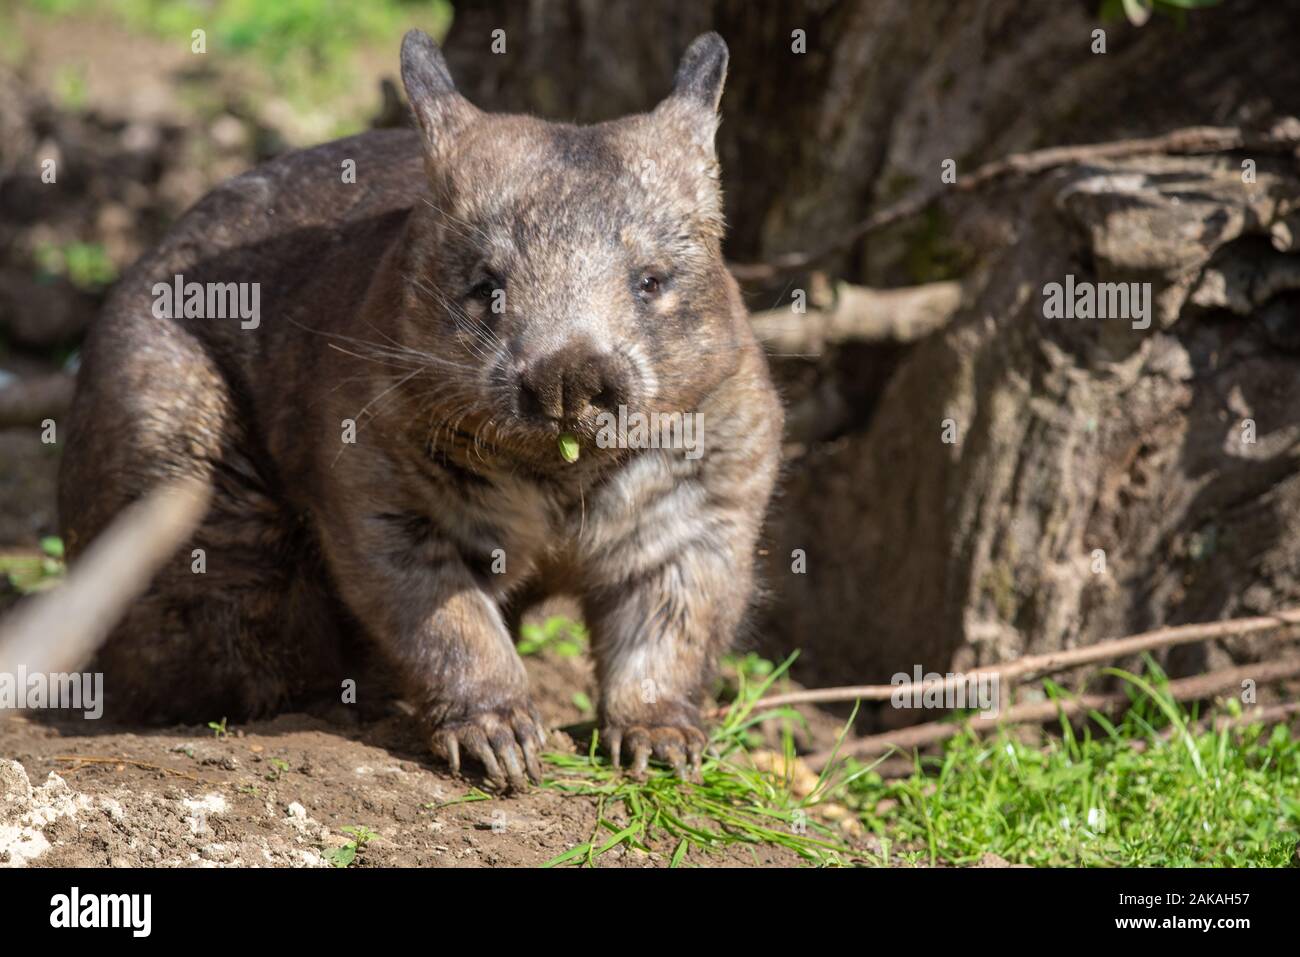 A wombat checks out its surroundings Stock Photo